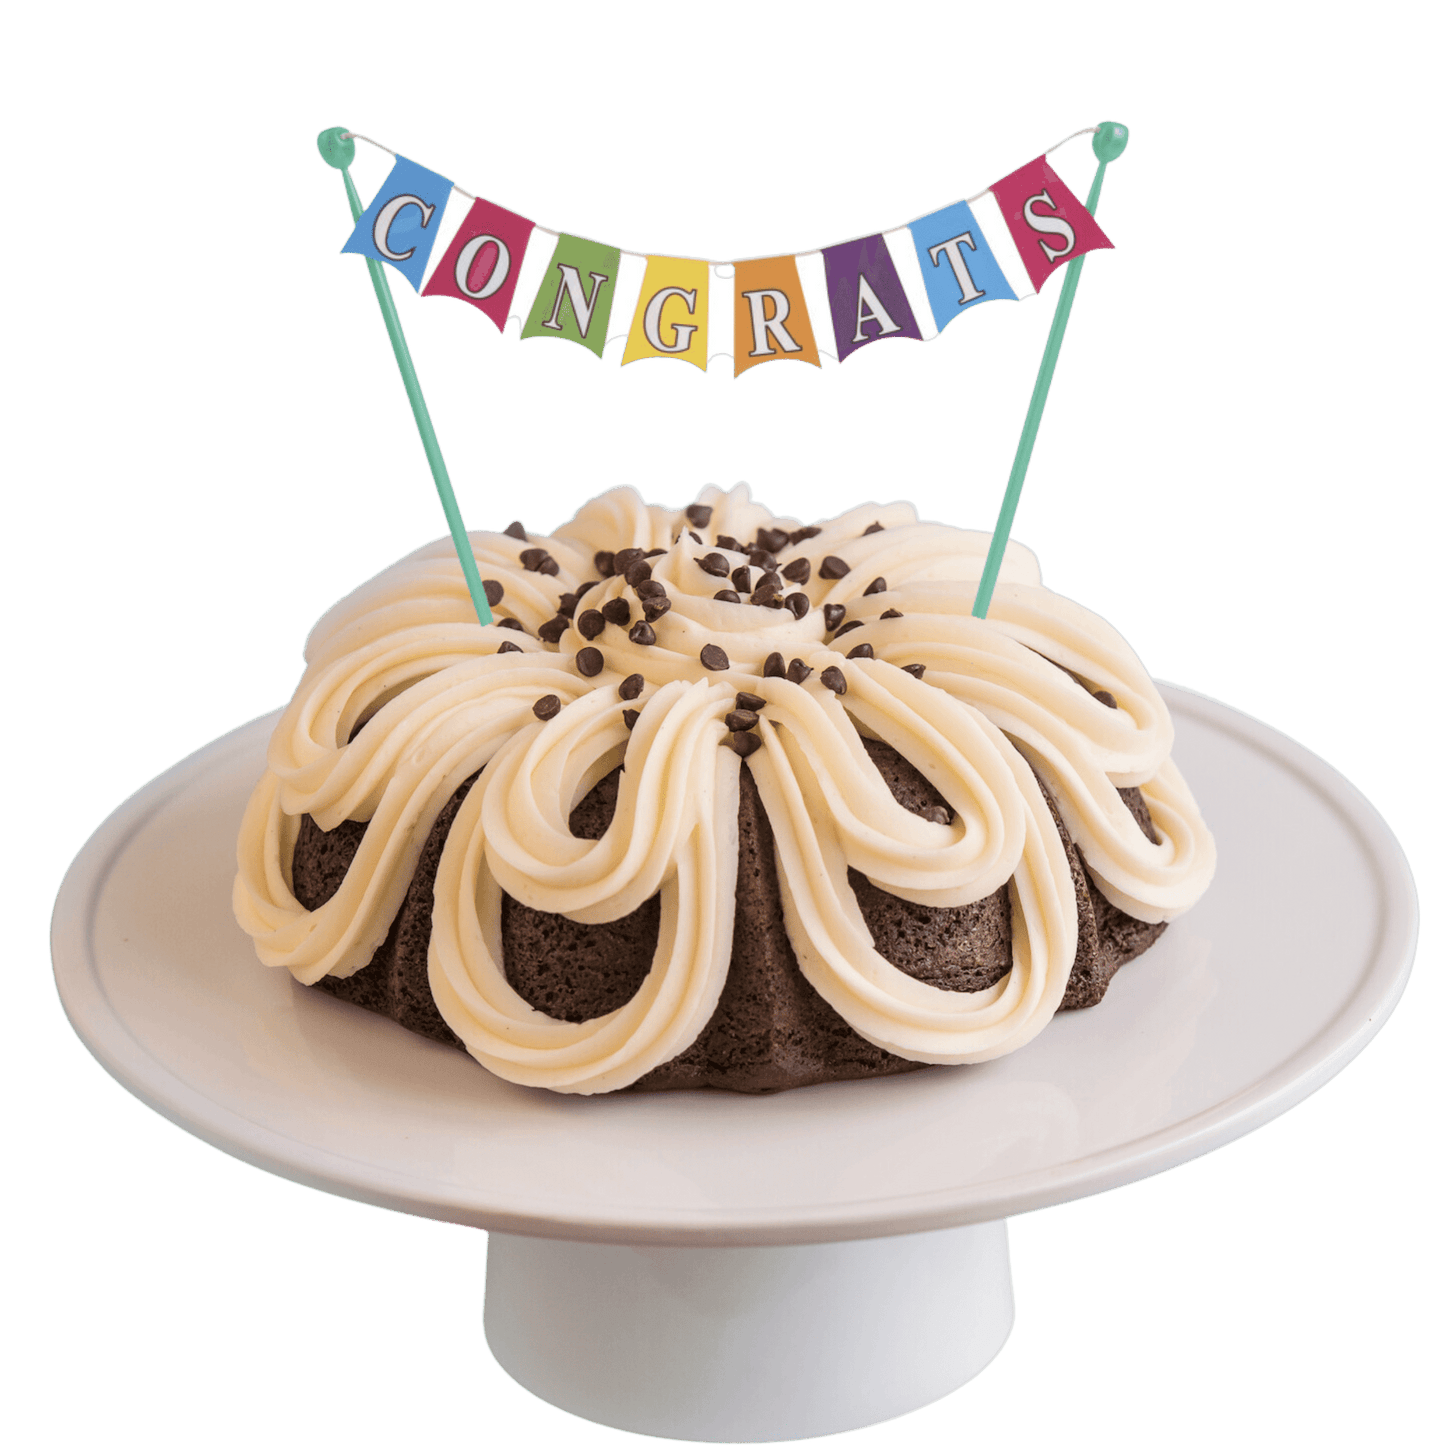 Double Chocolate | "CONGRATS" Cake Banner Bundt Cake - Bundt Cakes